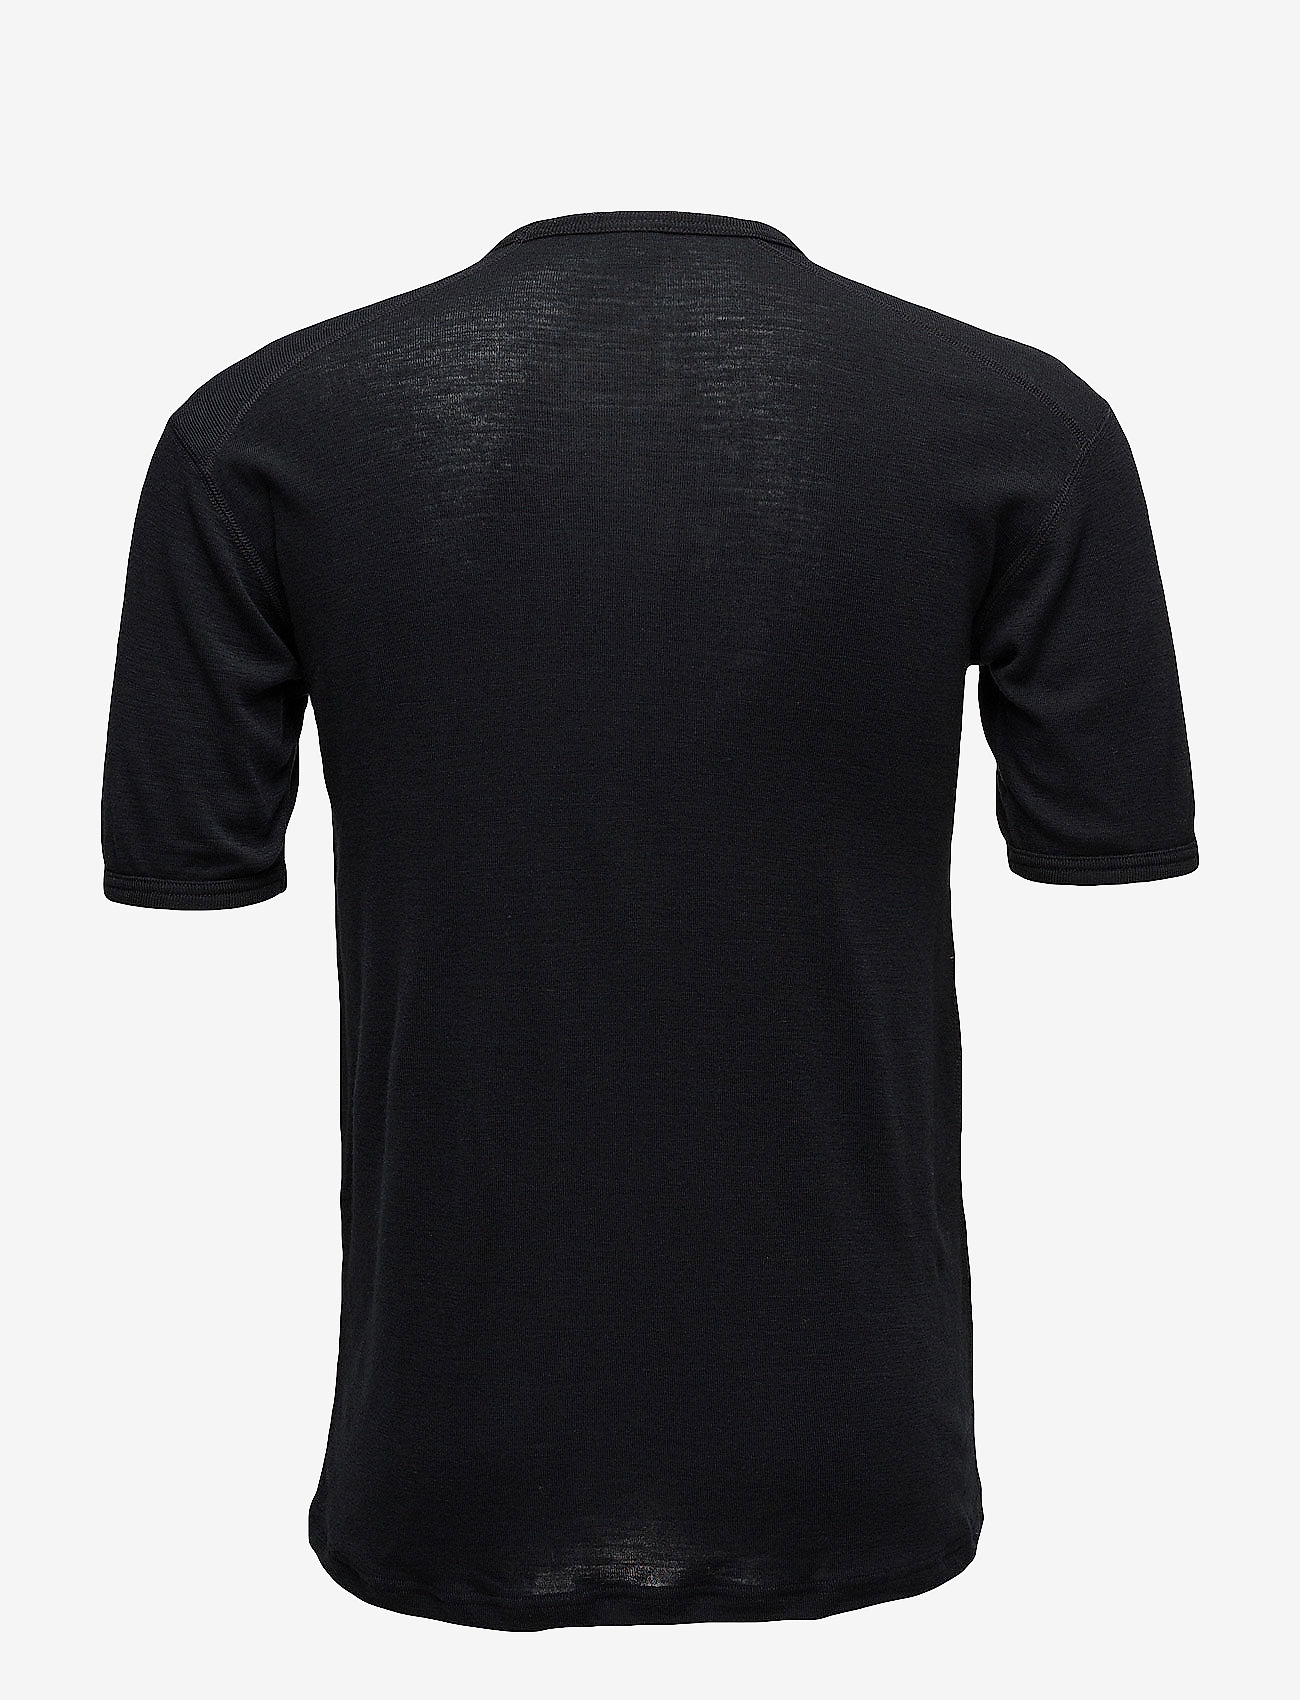 JBS - JBS, t-shirt - short-sleeved t-shirts - black - 1